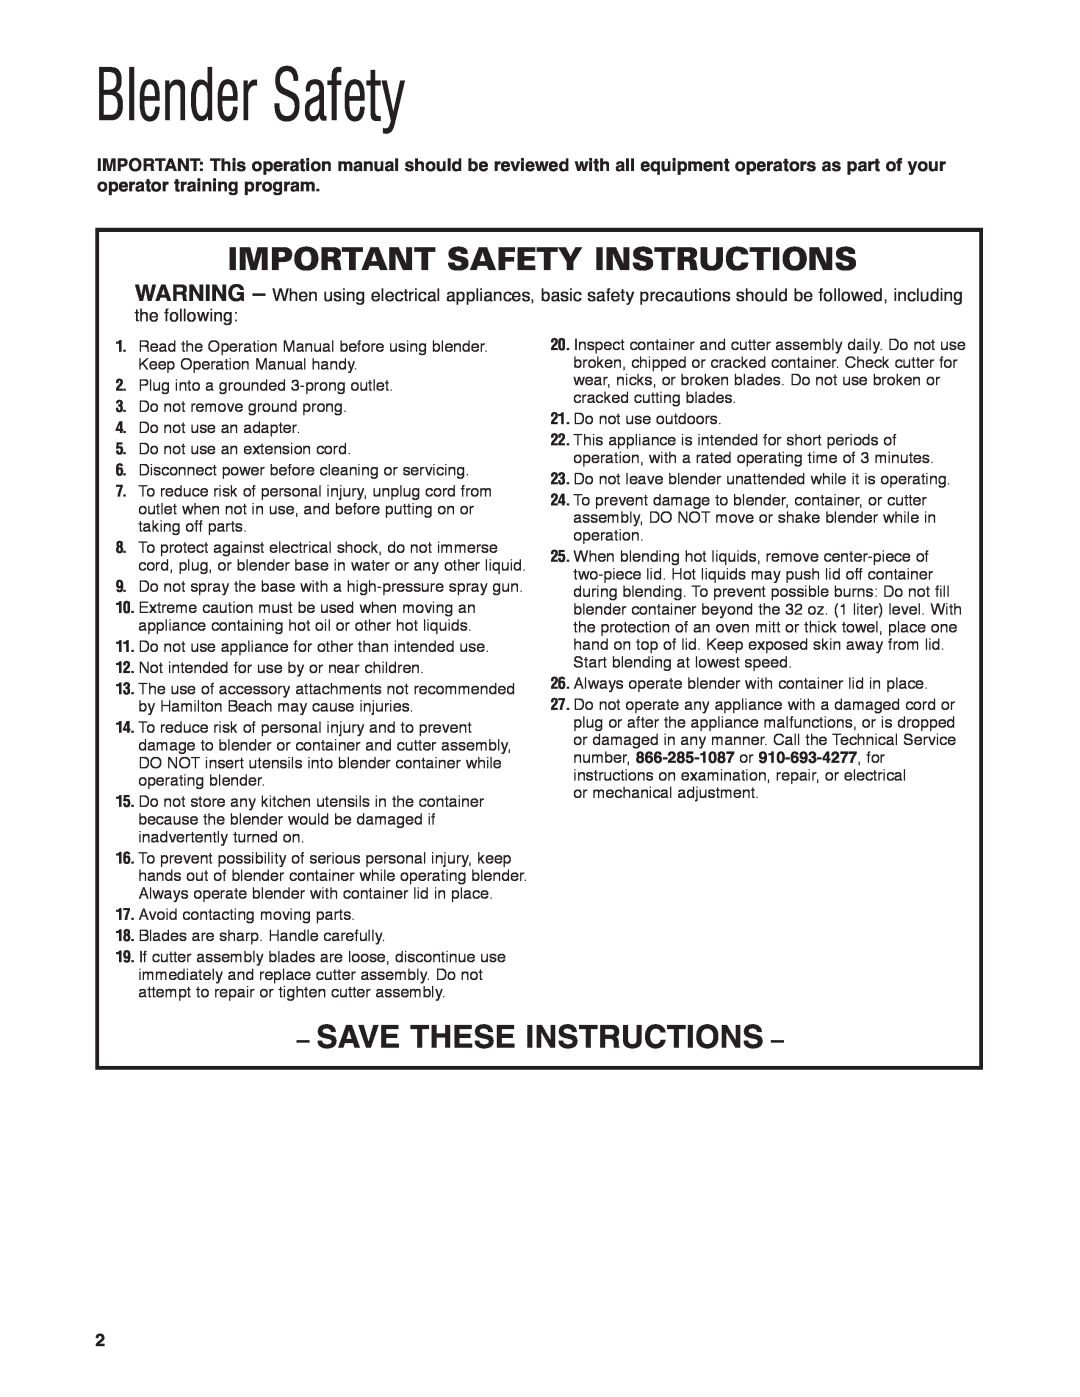 Hamilton Beach HBF400 manuel dutilisation Blender Safety, Important Safety Instructions, Save These Instructions 